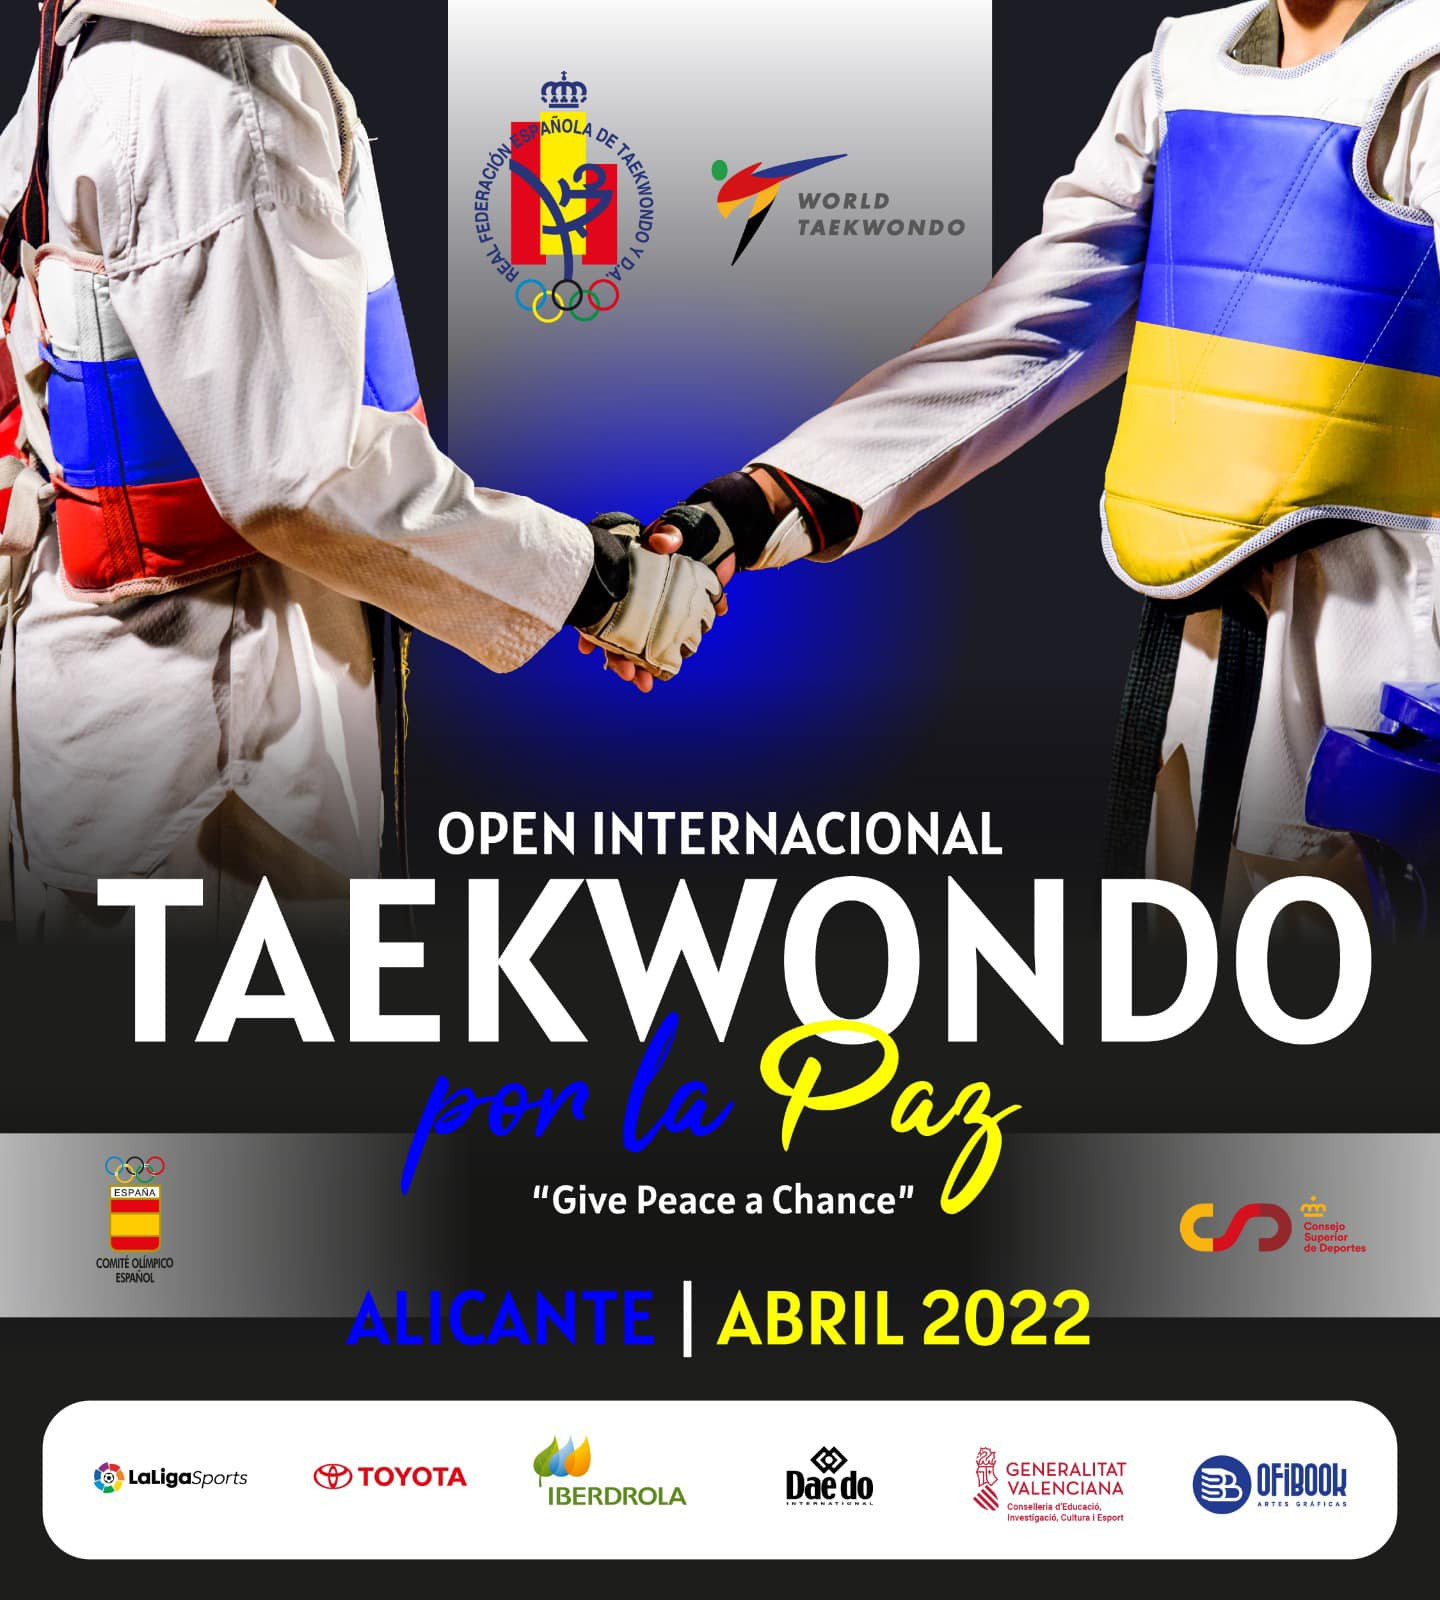 Royal Spanish Taekwondo Federation to host event in aid of Ukrainian refugees